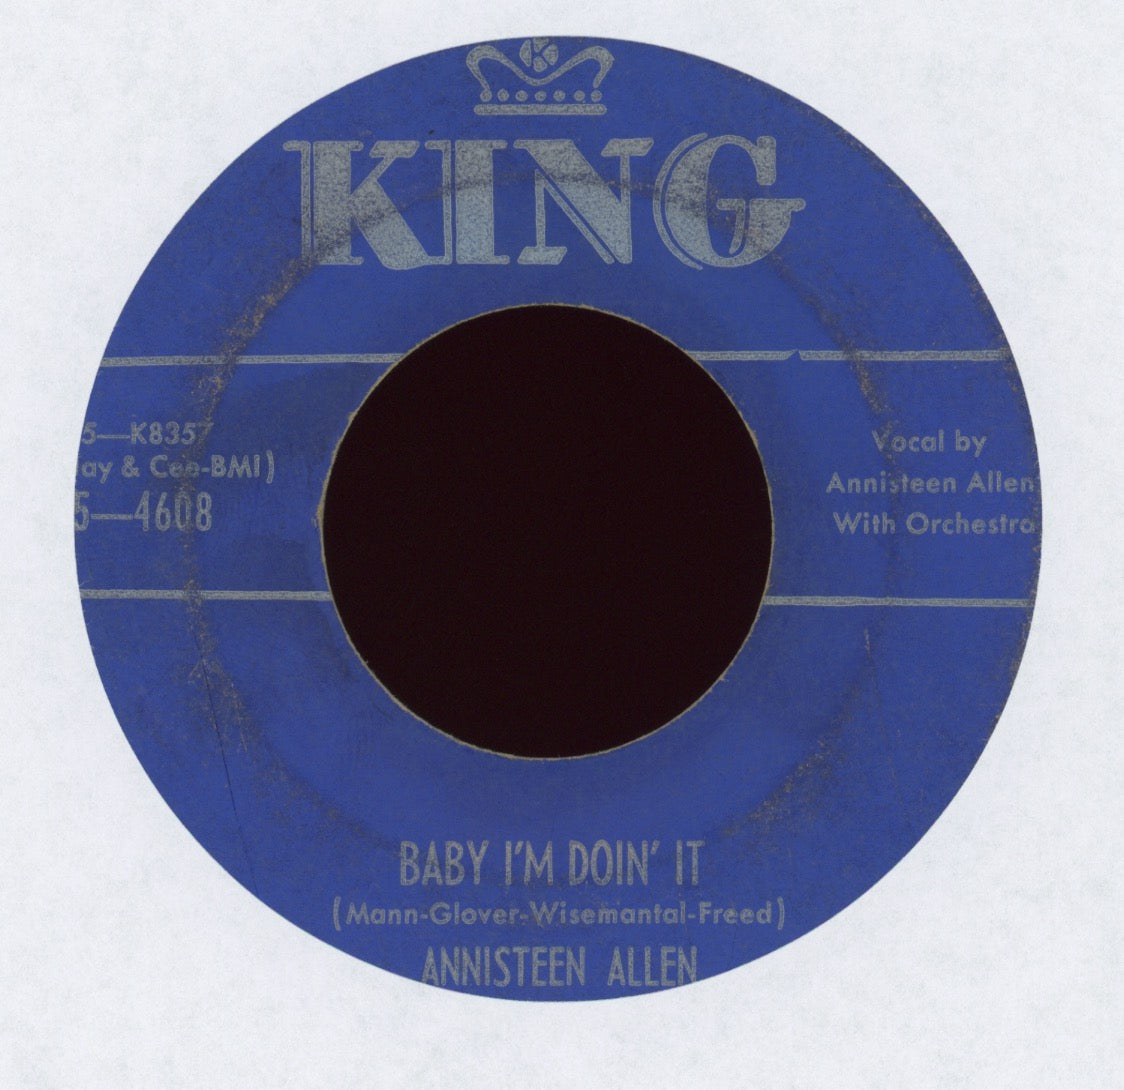 Annisteen Allen - Baby I'm Doin' It on King